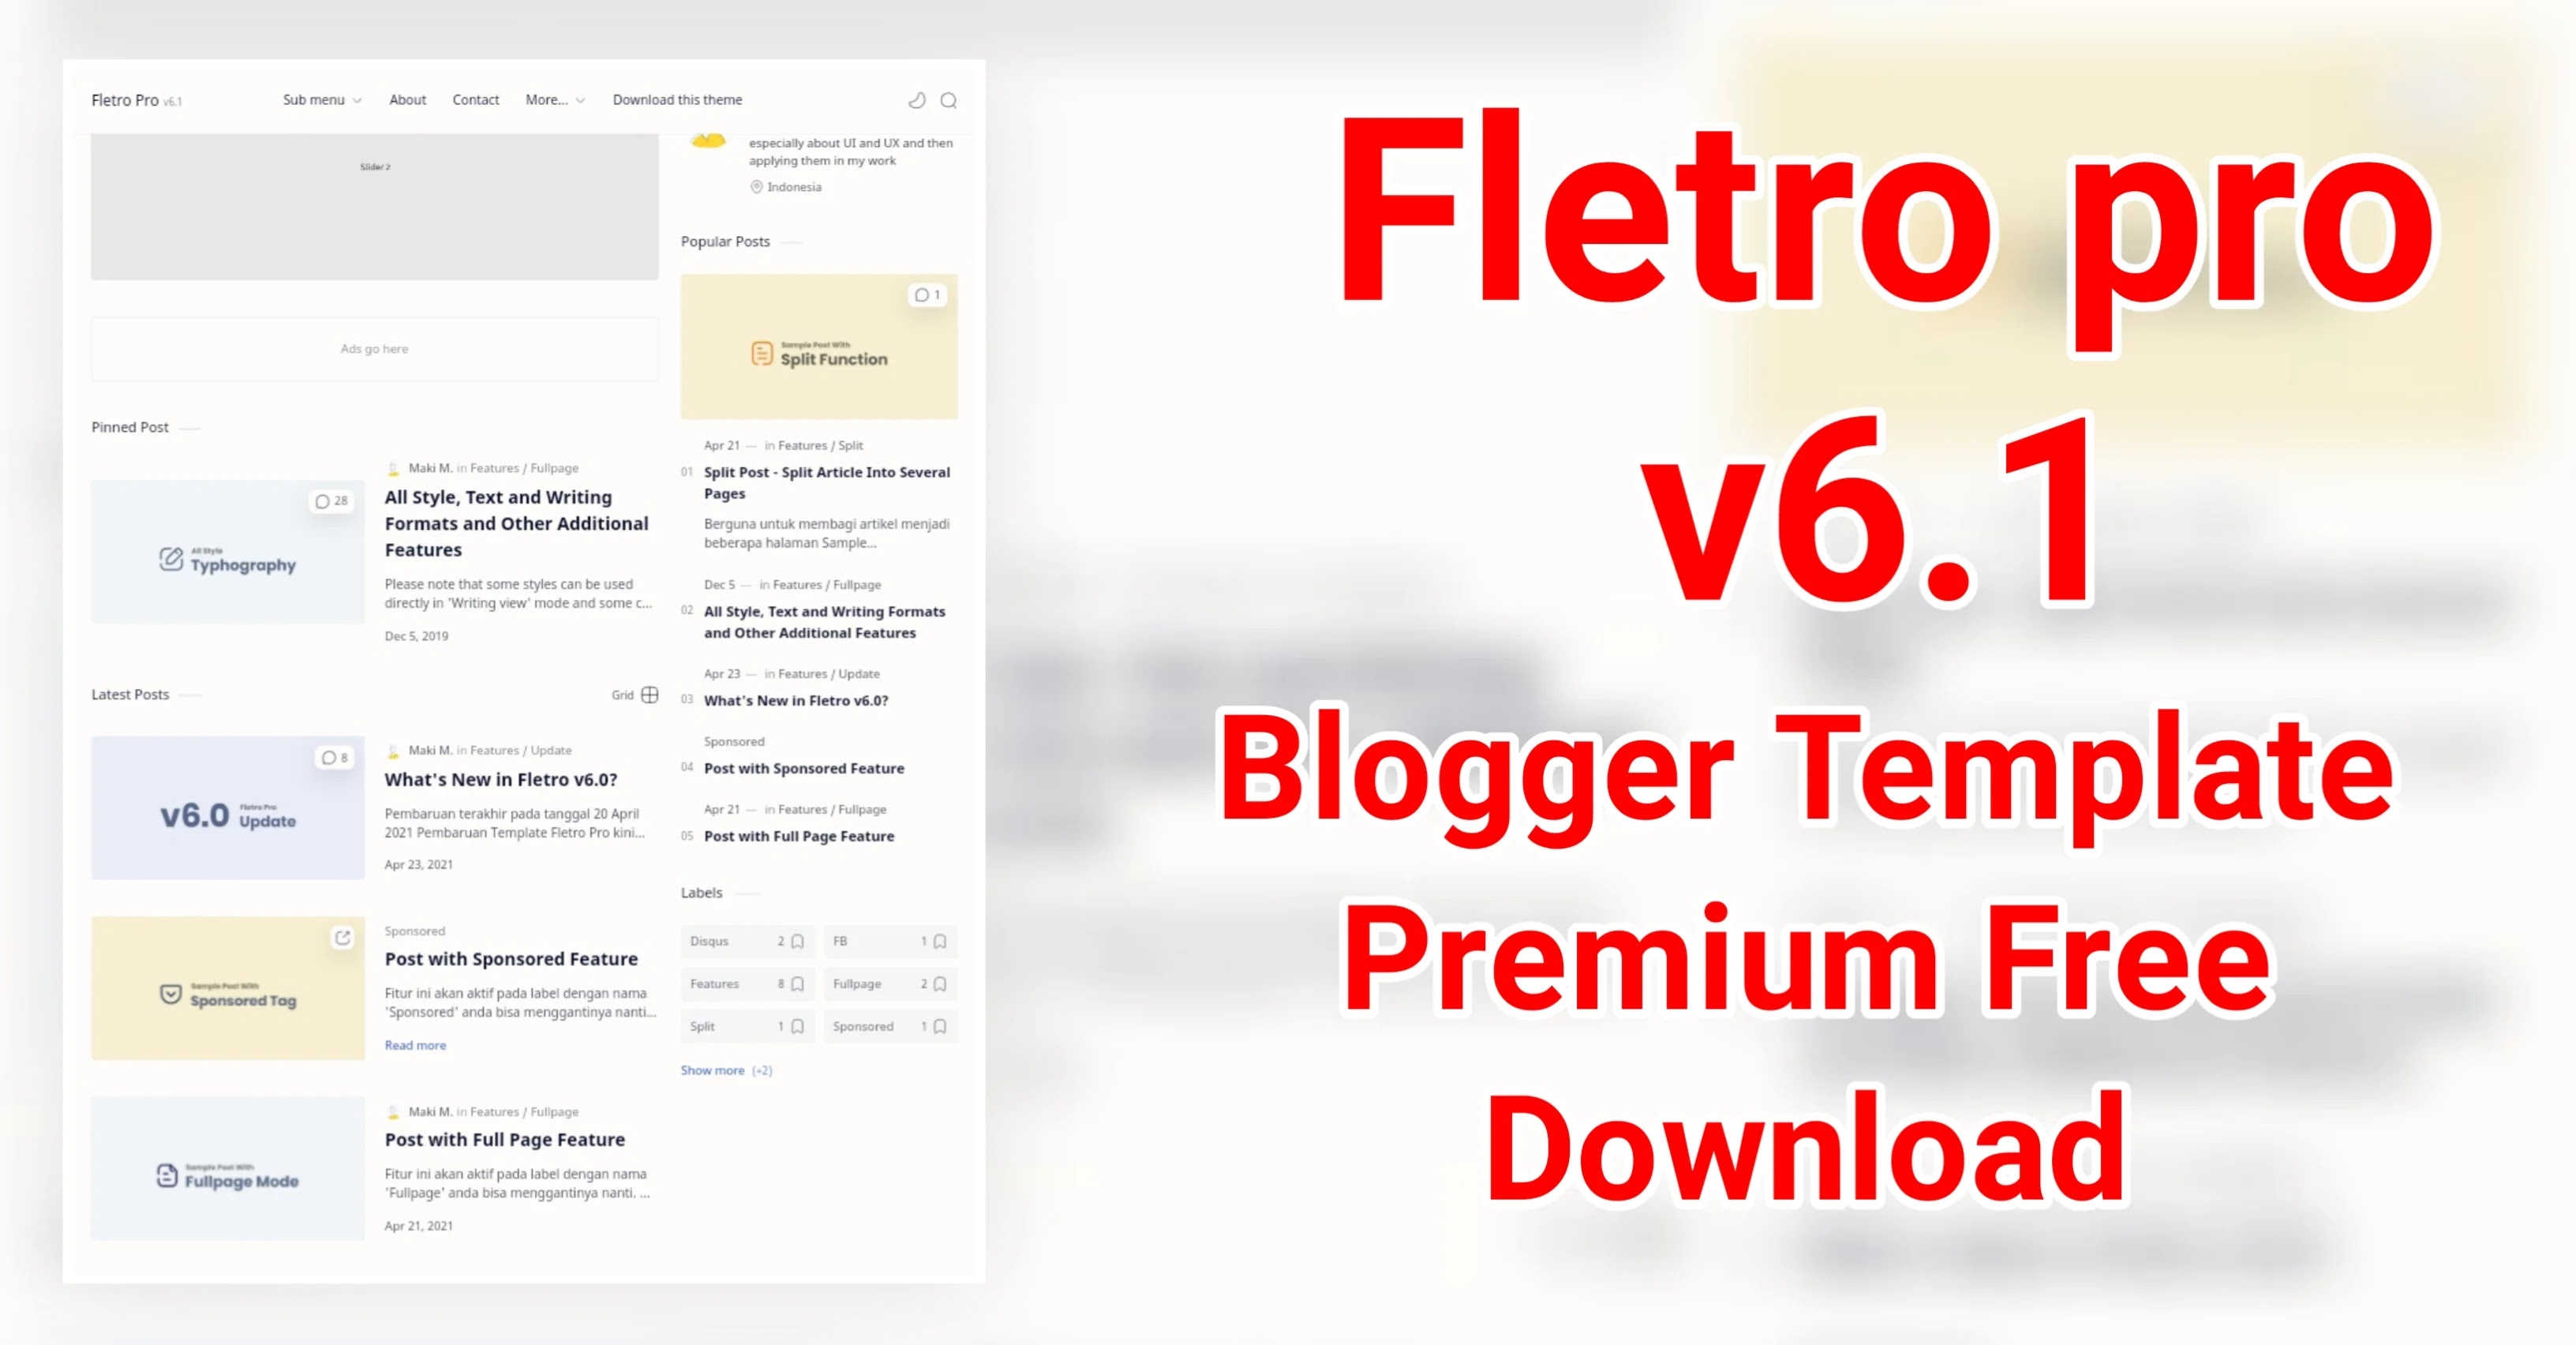 Fletro pro v6.1 Blogger Template Premium Free Download, fletro pro v6.1 customization, fletro pro v6.0 customization, fletro pro v6.1 download, fletro pro, fletro pro theme customization, fletro pro v6.1, fletro pro customization